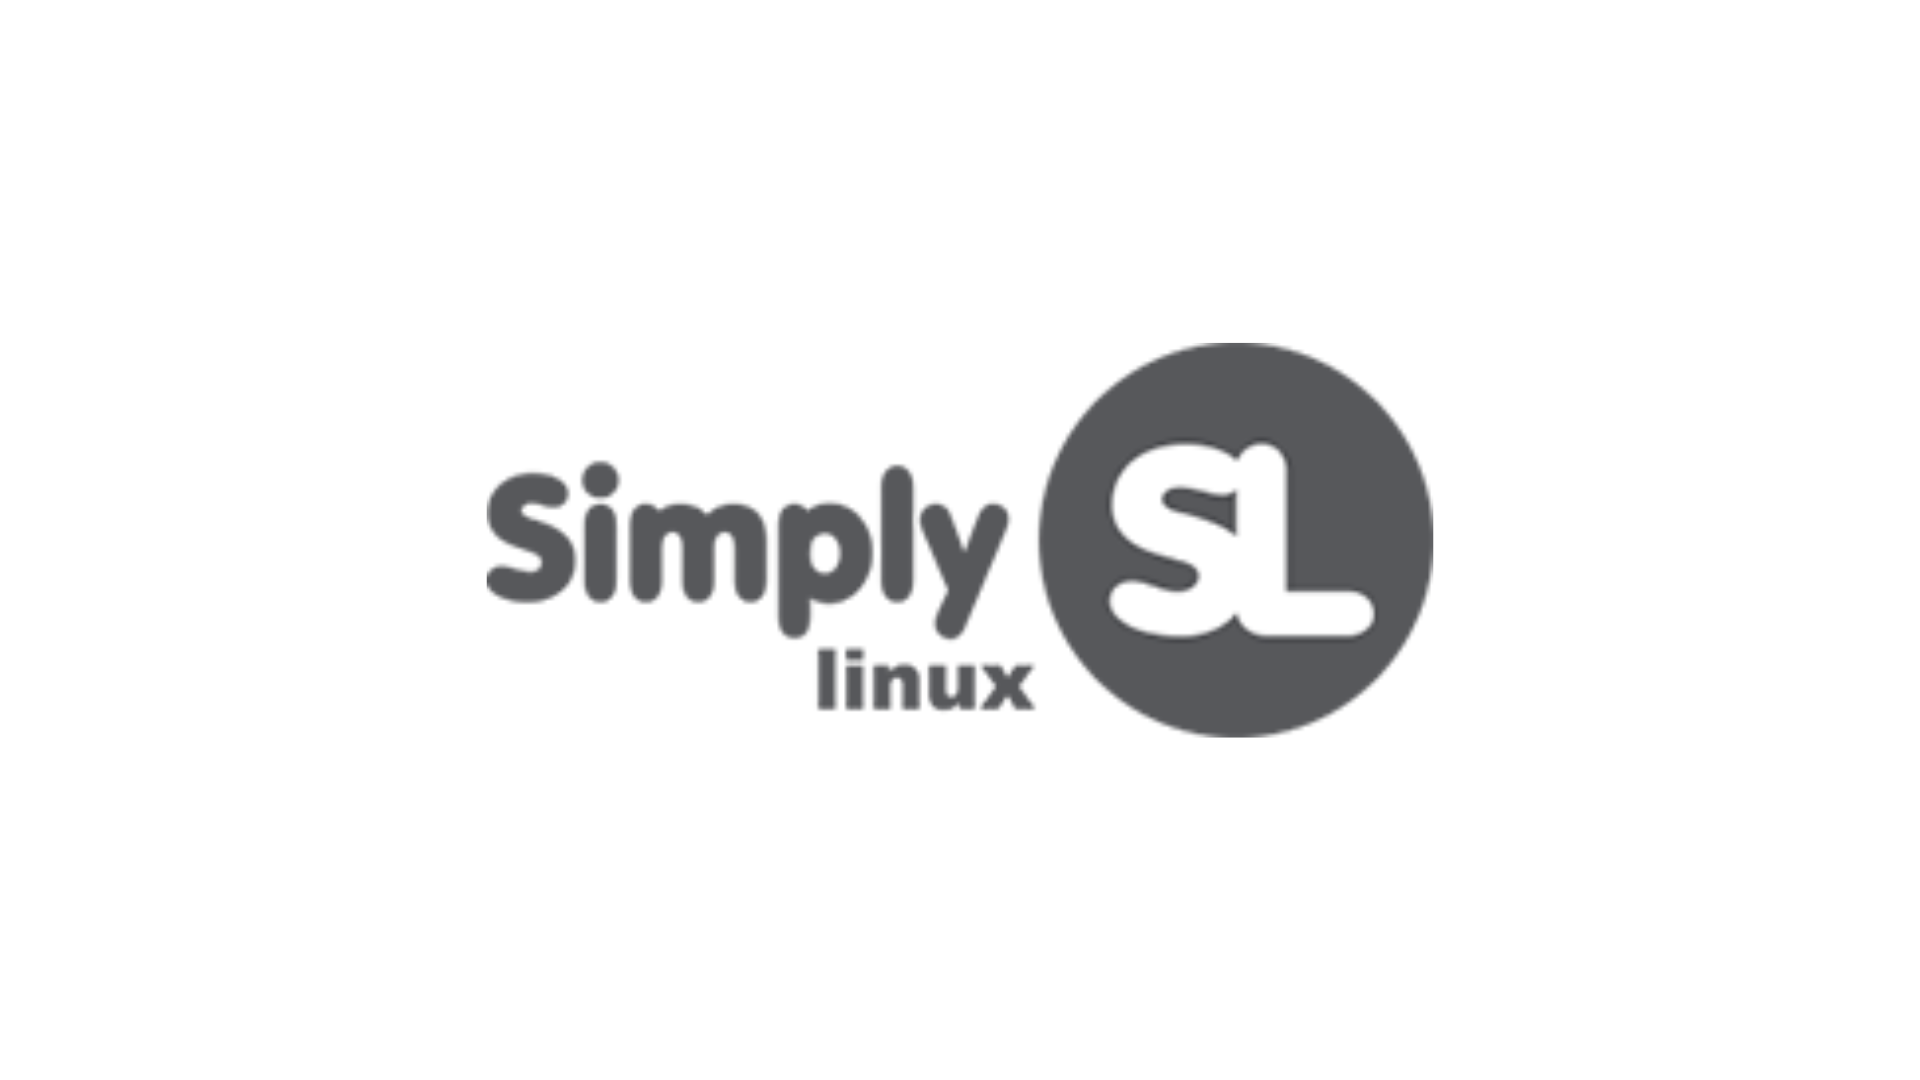 Симпли линукс. ОС simply Linux. Simply Linux логотип. Basalt simply Linux. Simply com